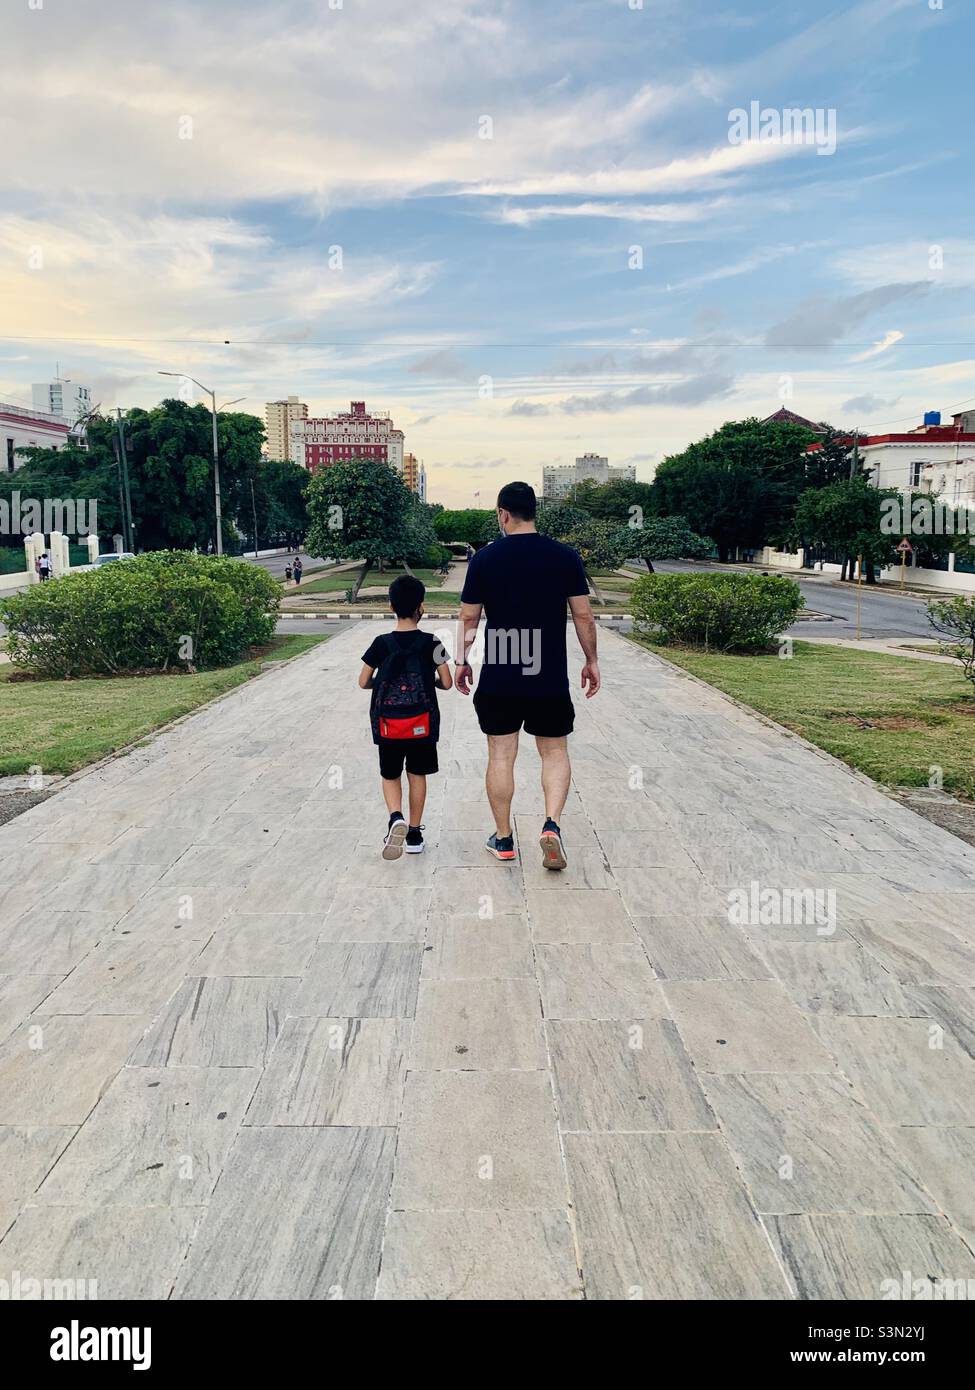 Padre e hijo caminando por el parque peatonal, fotografiado desde atrás. Concepto de crianza Foto de stock